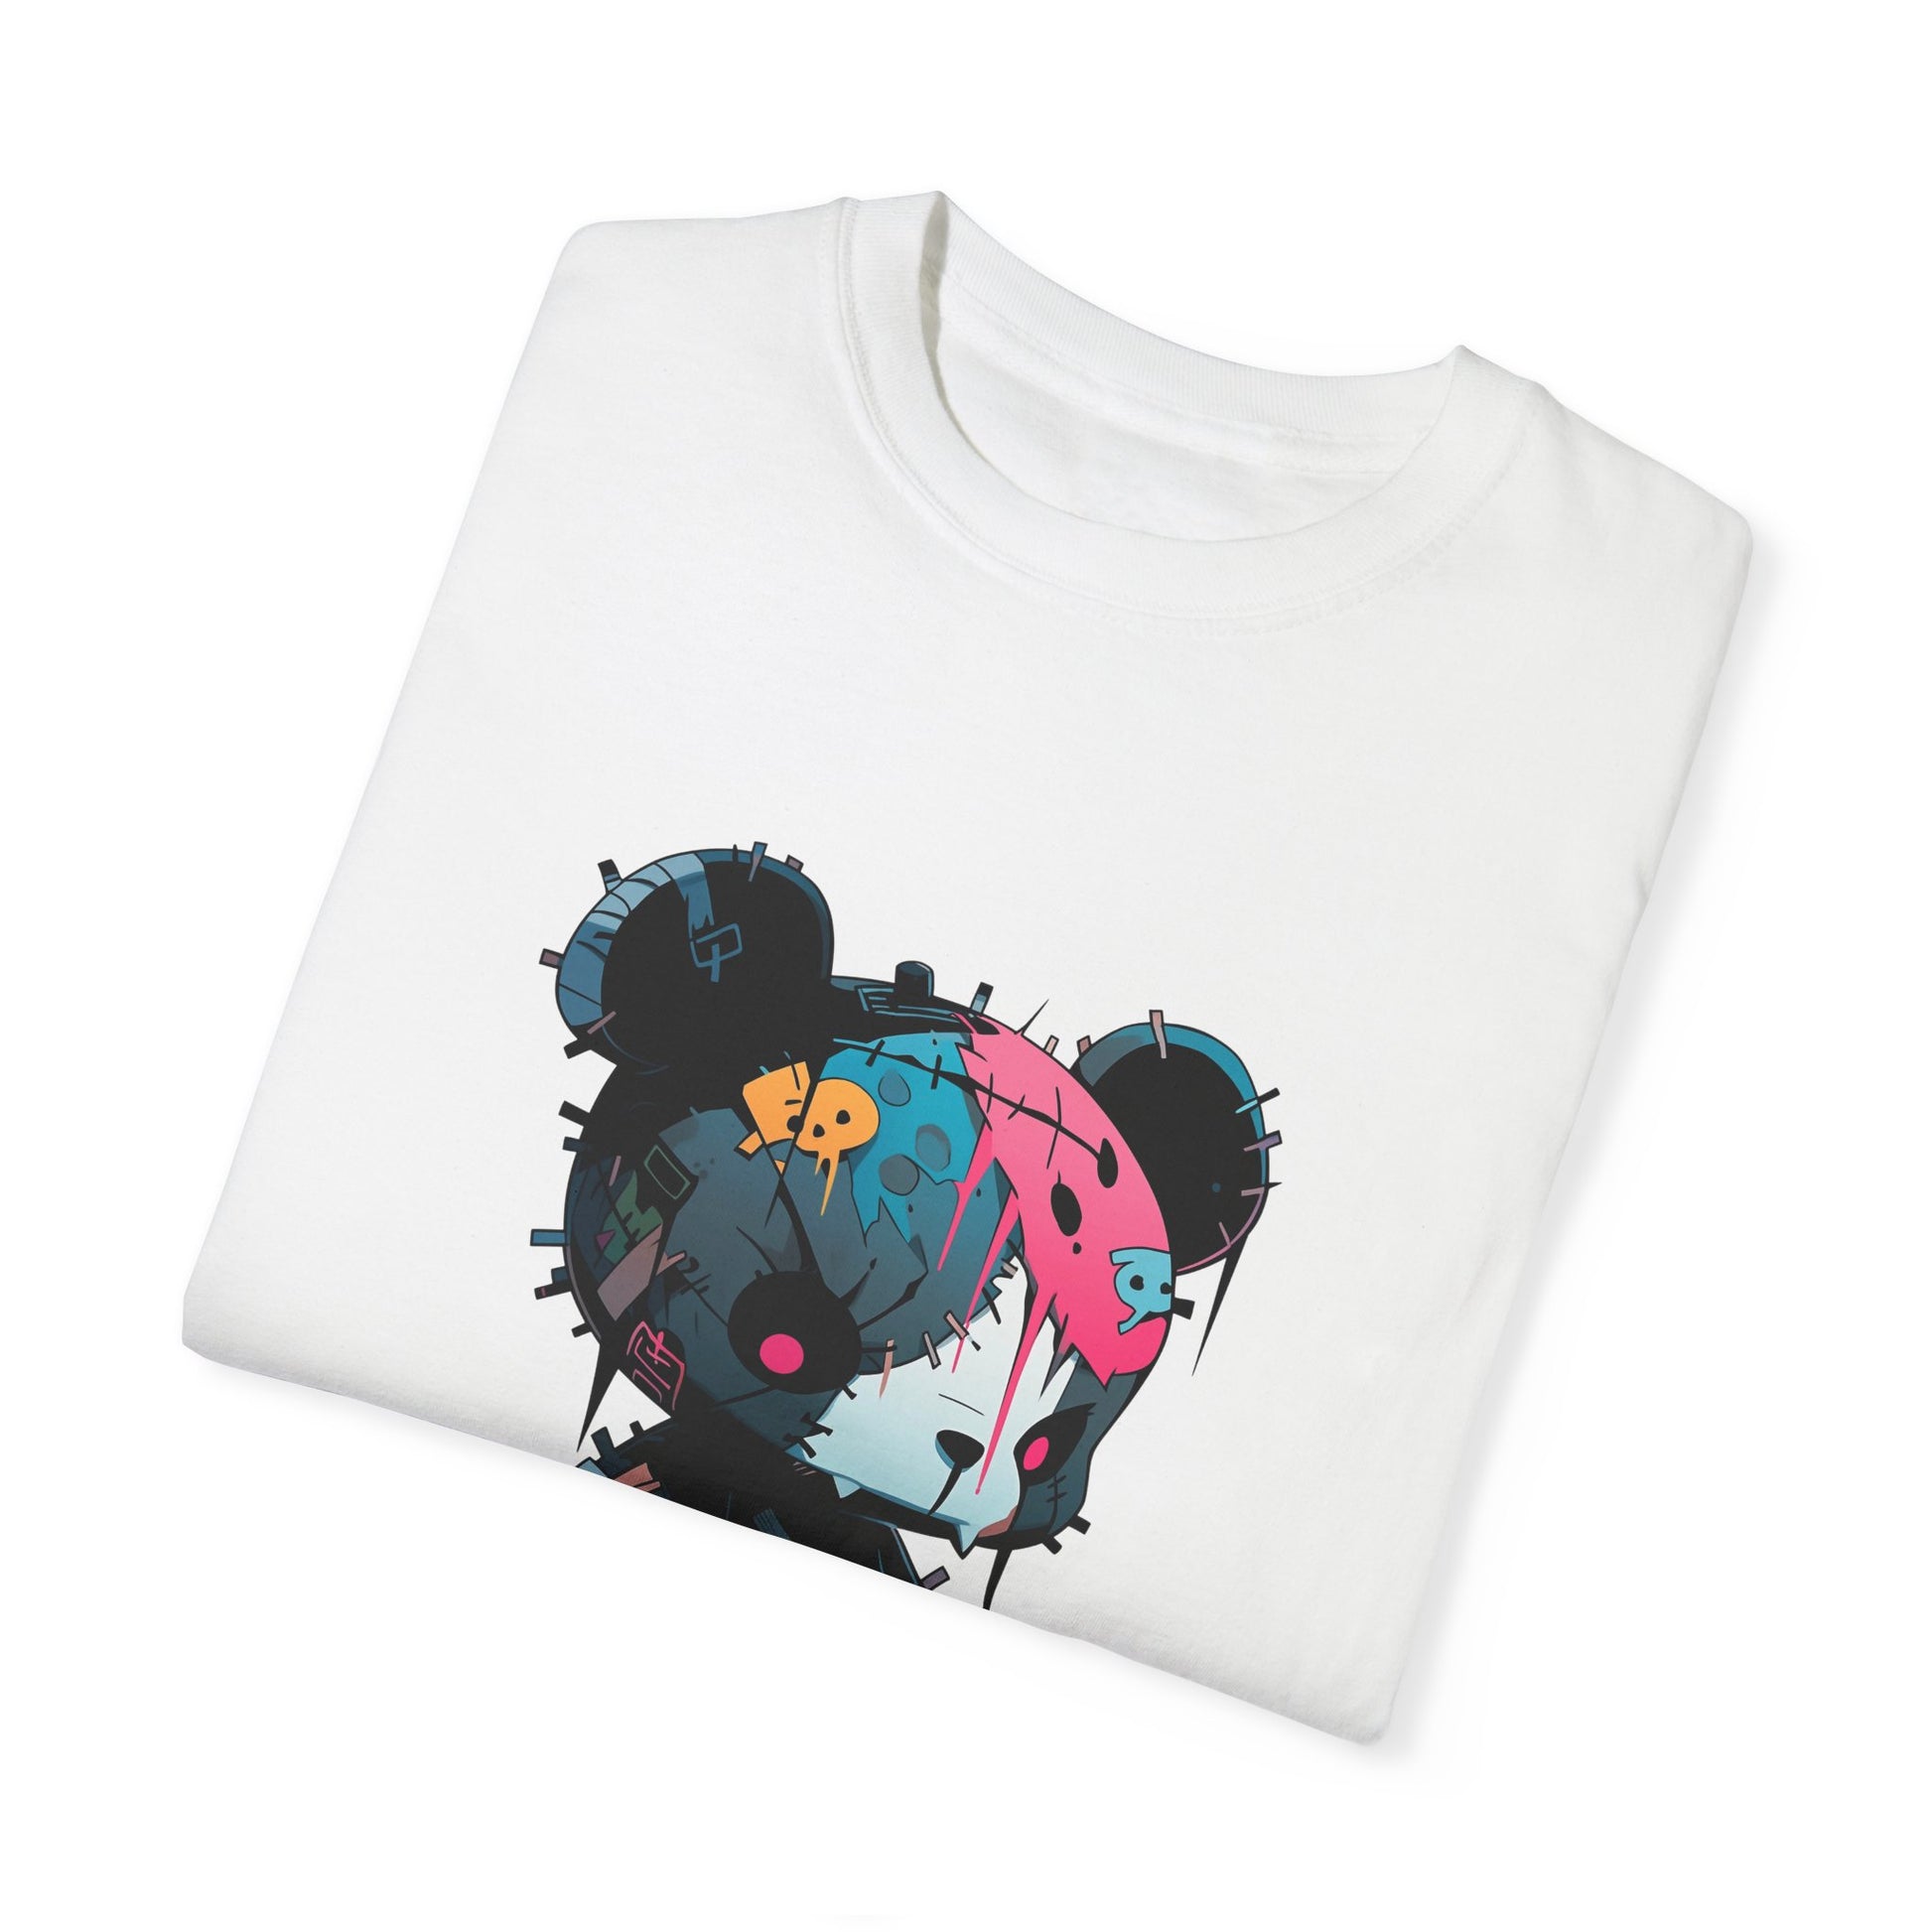 Hip Hop Teddy Bear Graphic Unisex Garment-dyed T-shirt Cotton Funny Humorous Graphic Soft Premium Unisex Men Women White T-shirt Birthday Gift-17